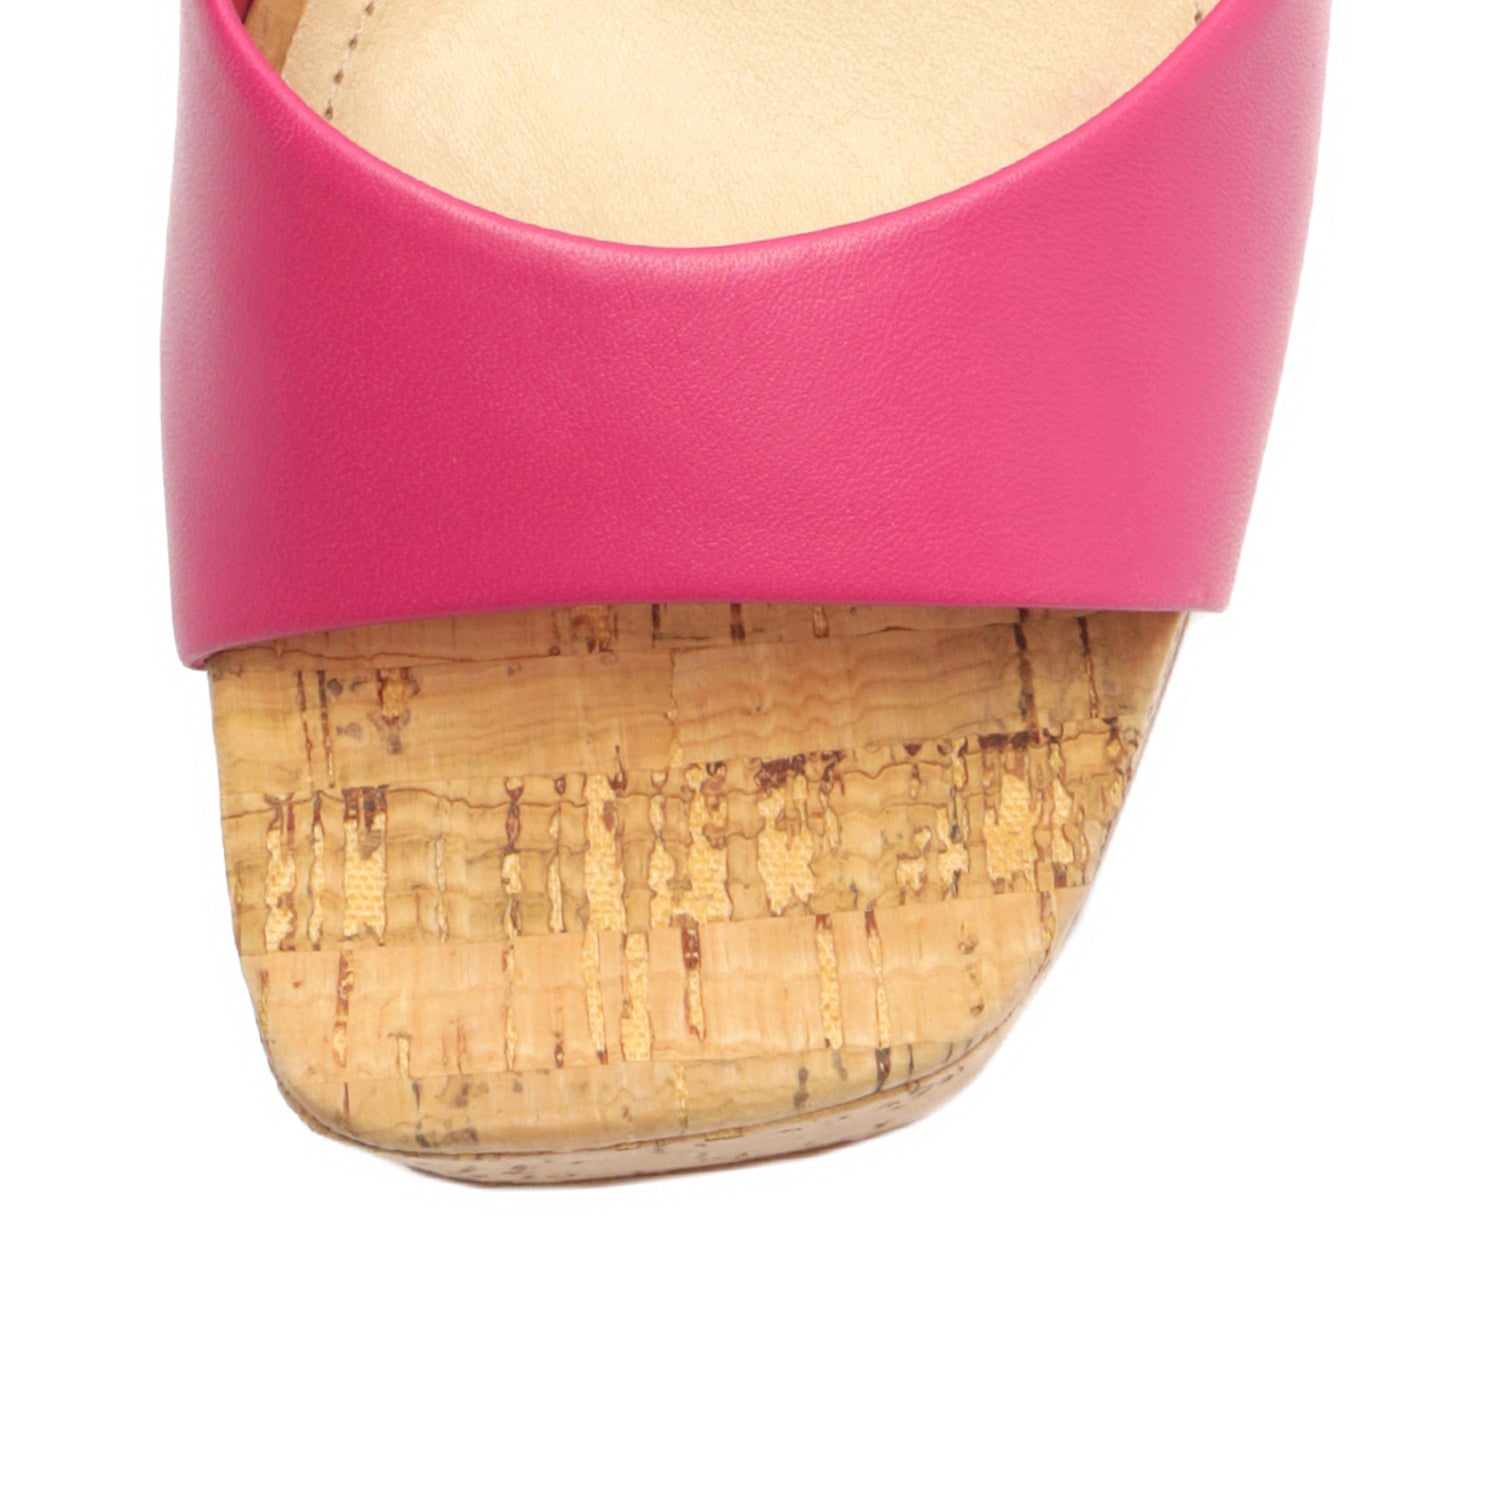 Glayce Nappa Leather Sandal Hot Pink